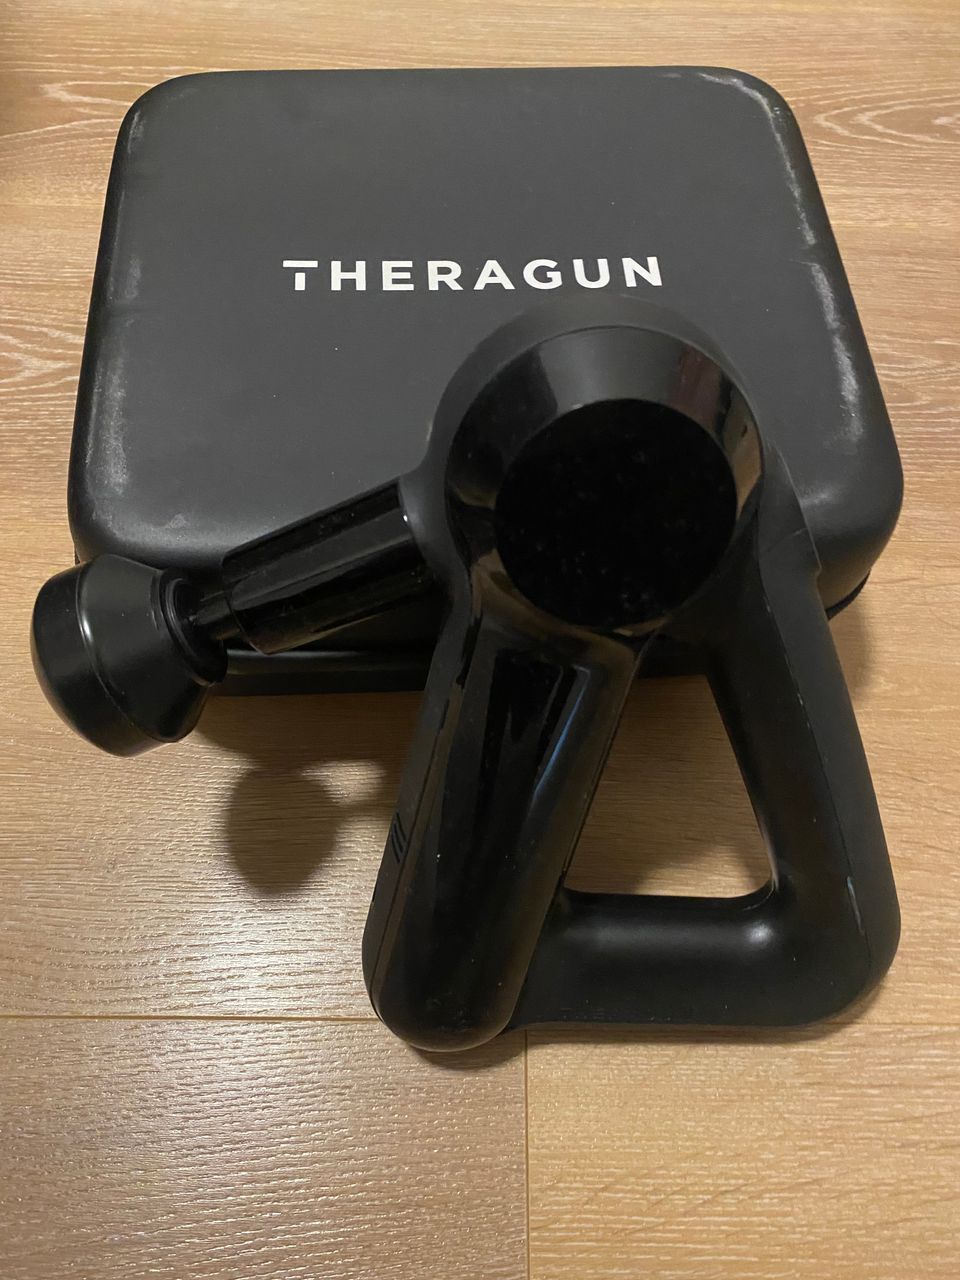 Theragun Prime Massage gun - Powerful deep muscle treatment